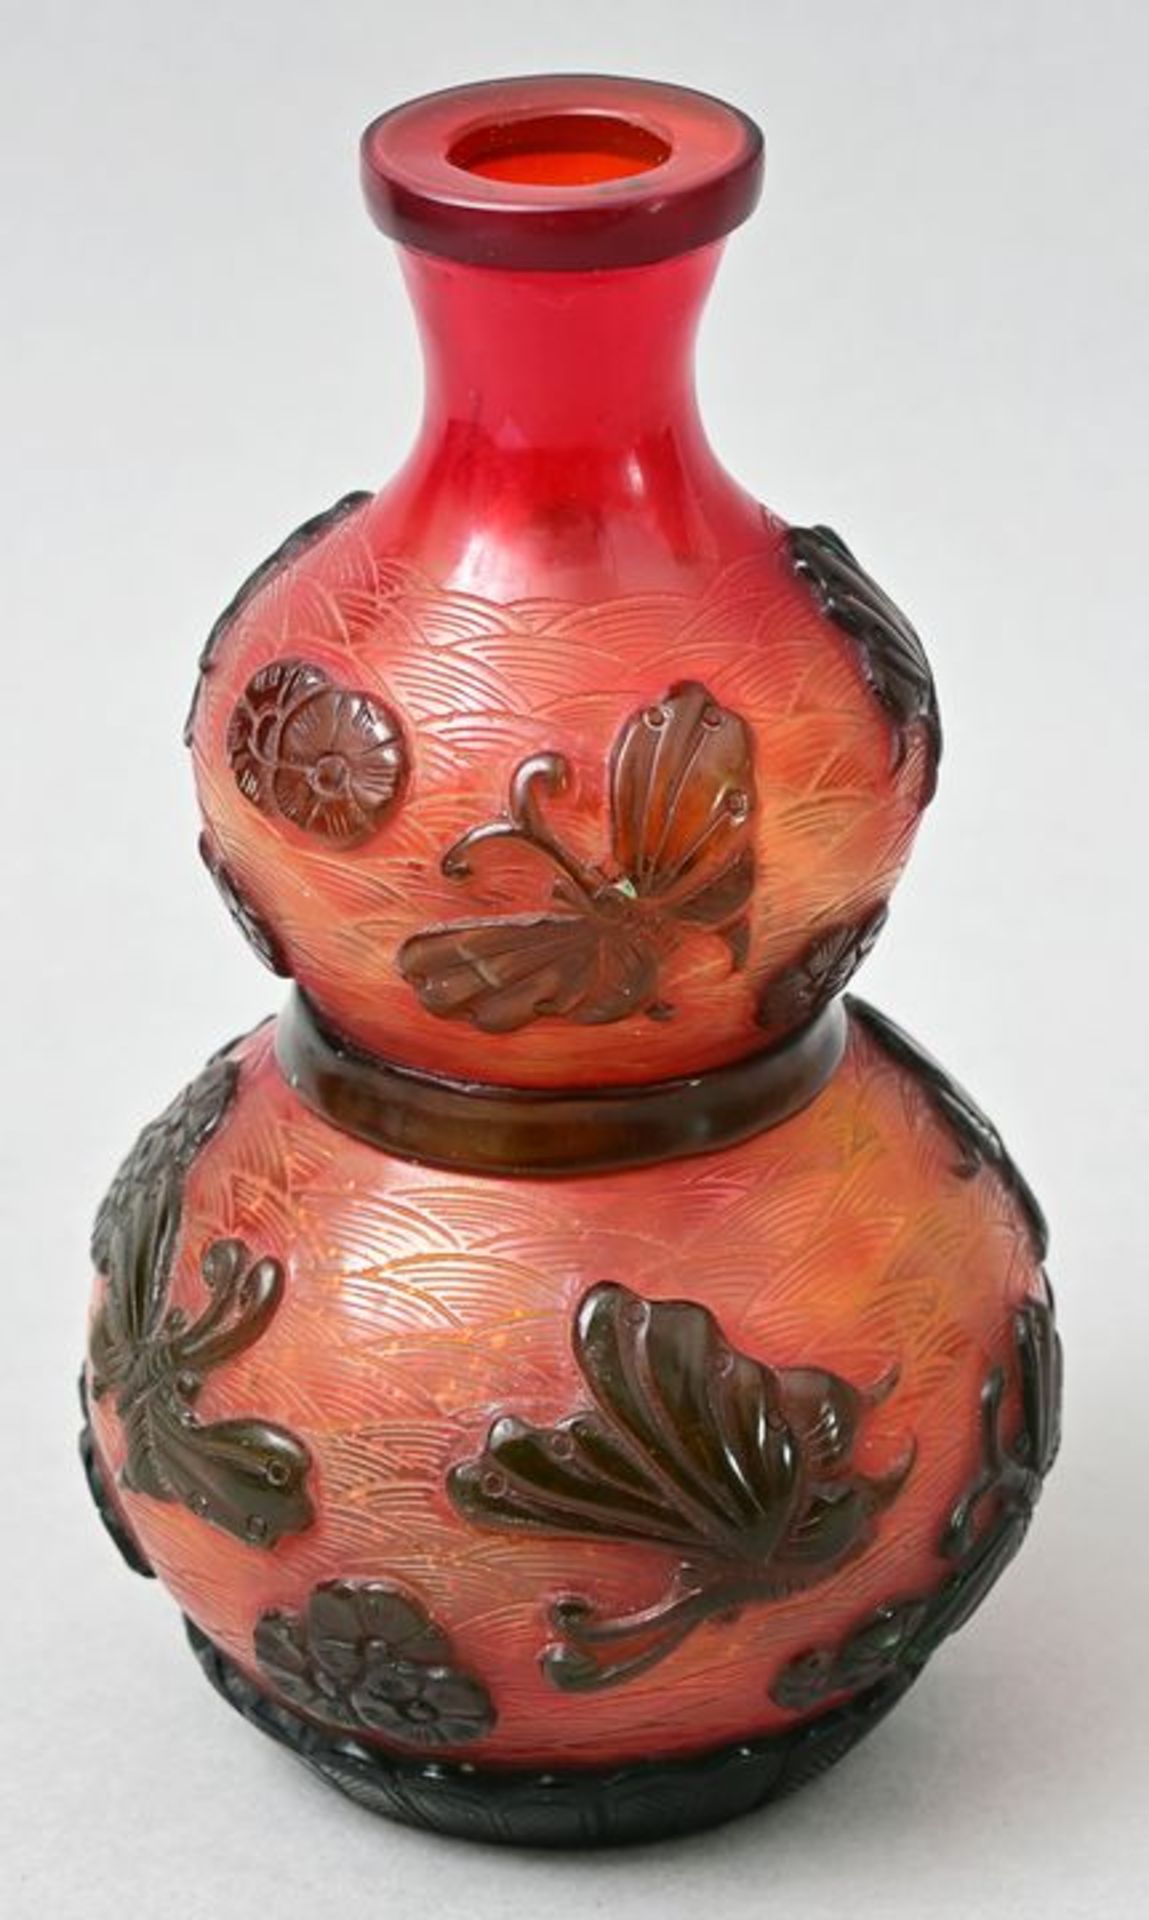 Flaschenvase Peking-Glas/ Peking glass bottle - Image 2 of 5